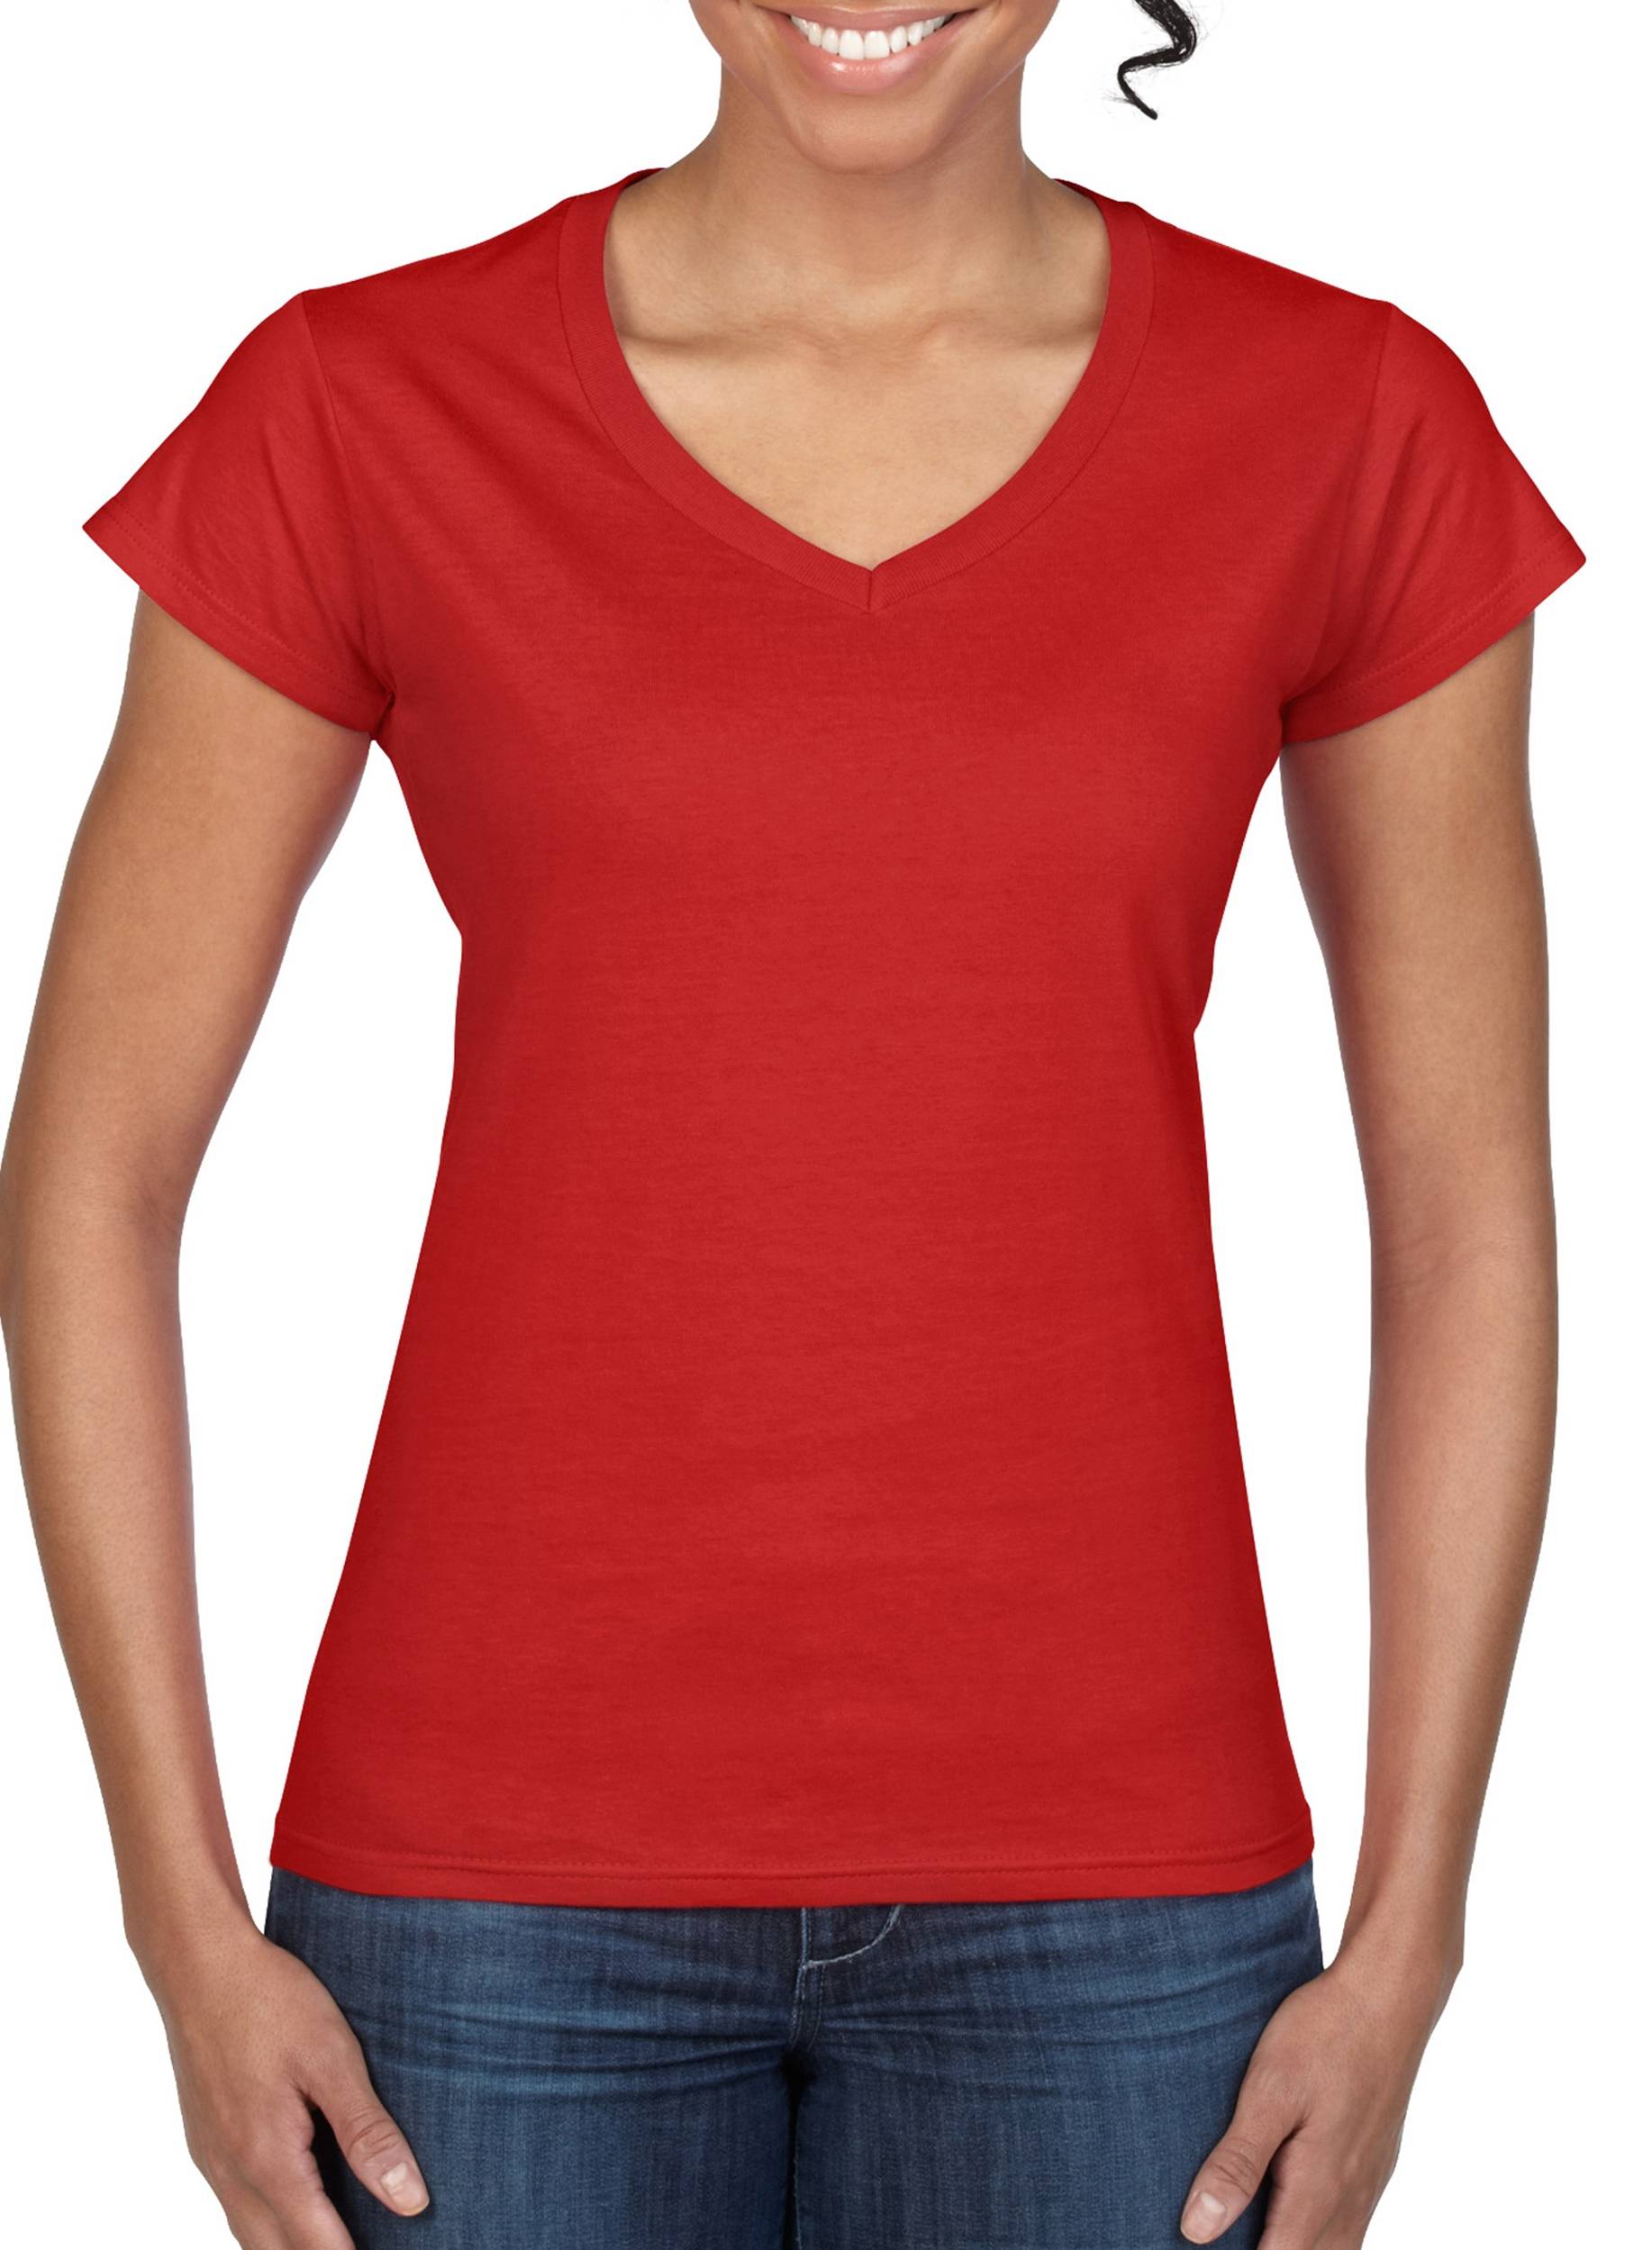 Gildan Ladies SoftStyle V Neck T-Shirt Short Sleeve Plain Cotton Tee Top New